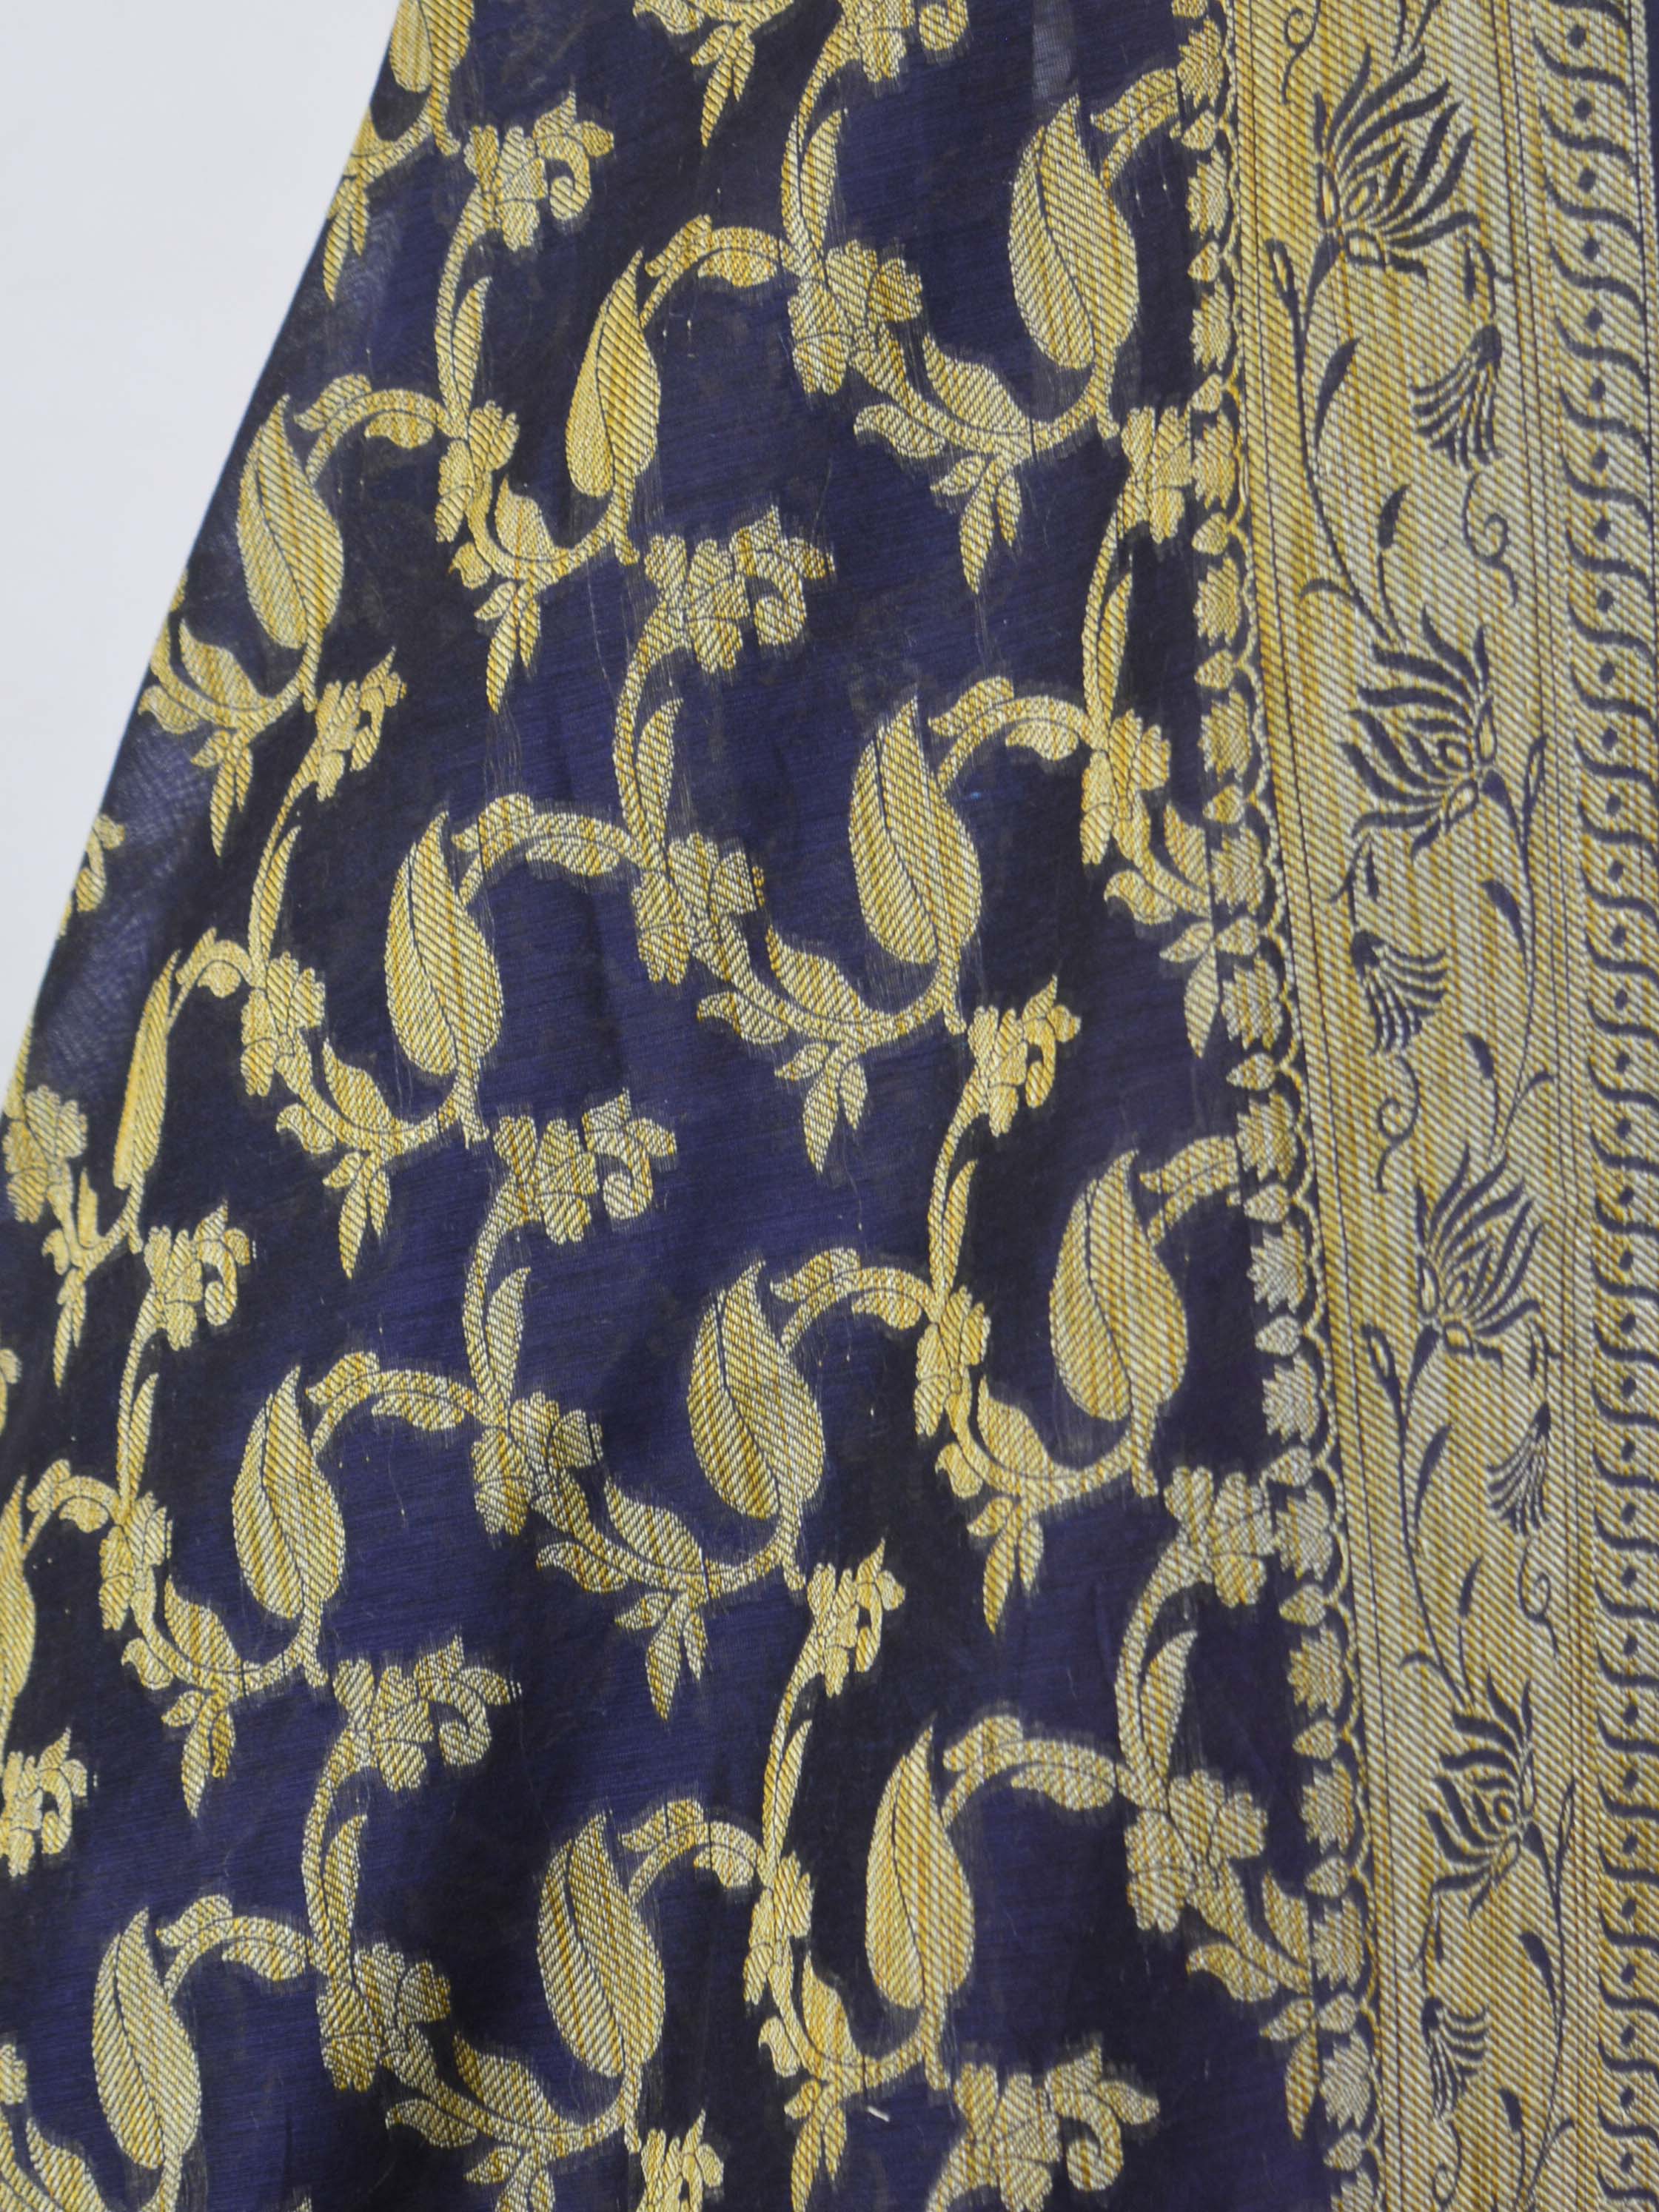 Banarasee Soft Cotton Ghichha Work Salwar Kameez Fabric With Blue Dupatta-Magenta